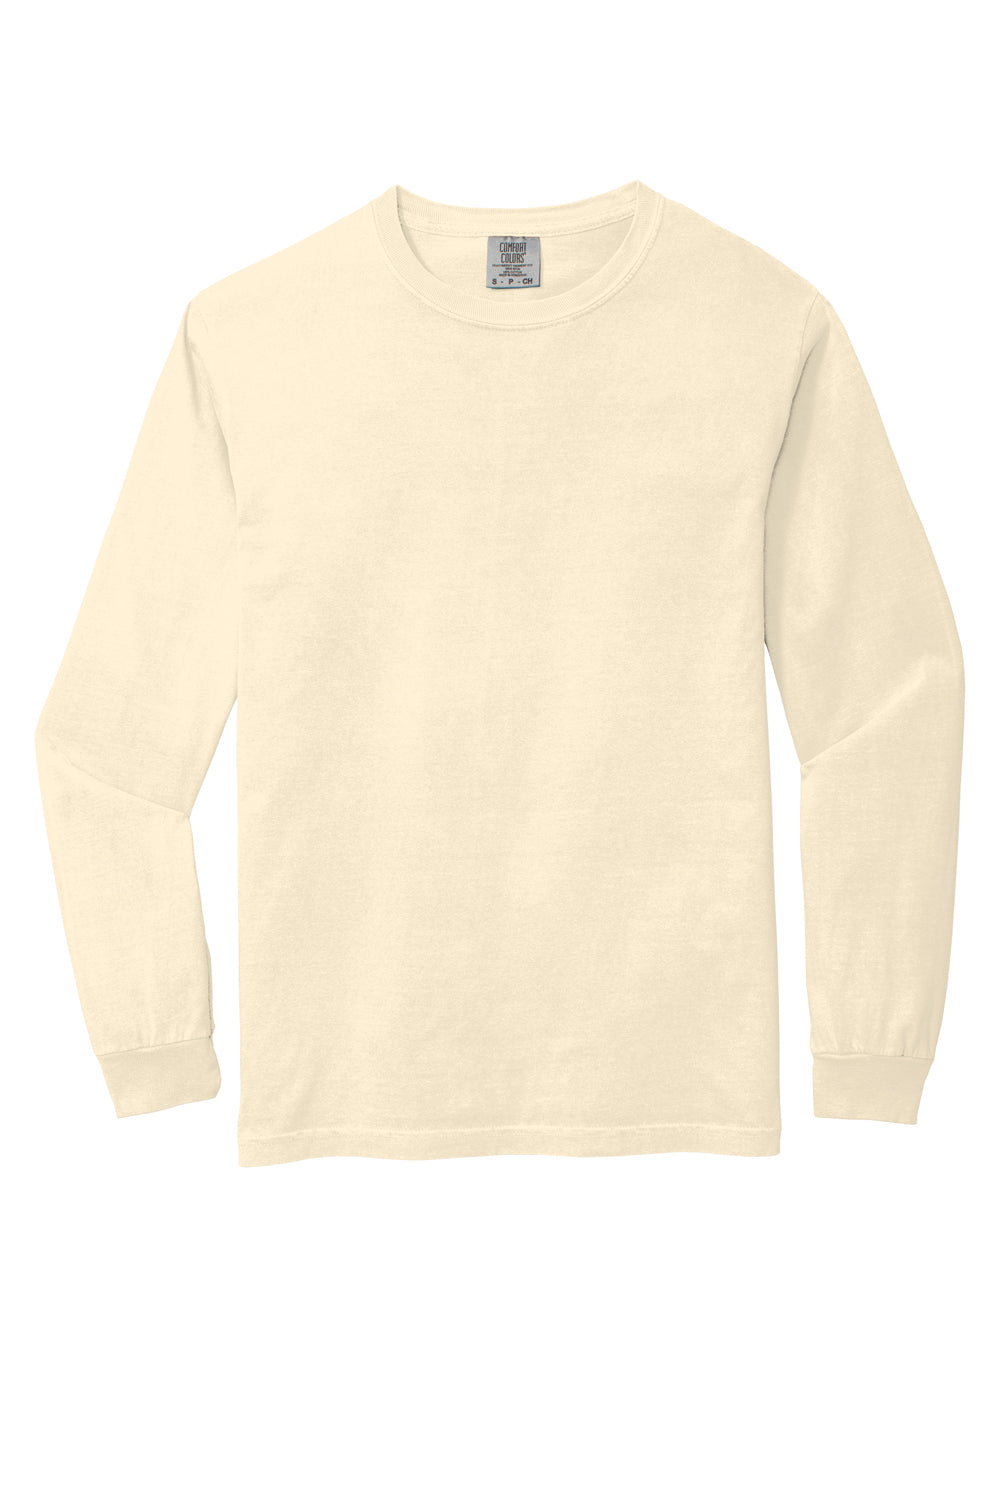 Comfort Colors Mens Long Sleeve Crewneck T-Shirt Ivory Flat Front